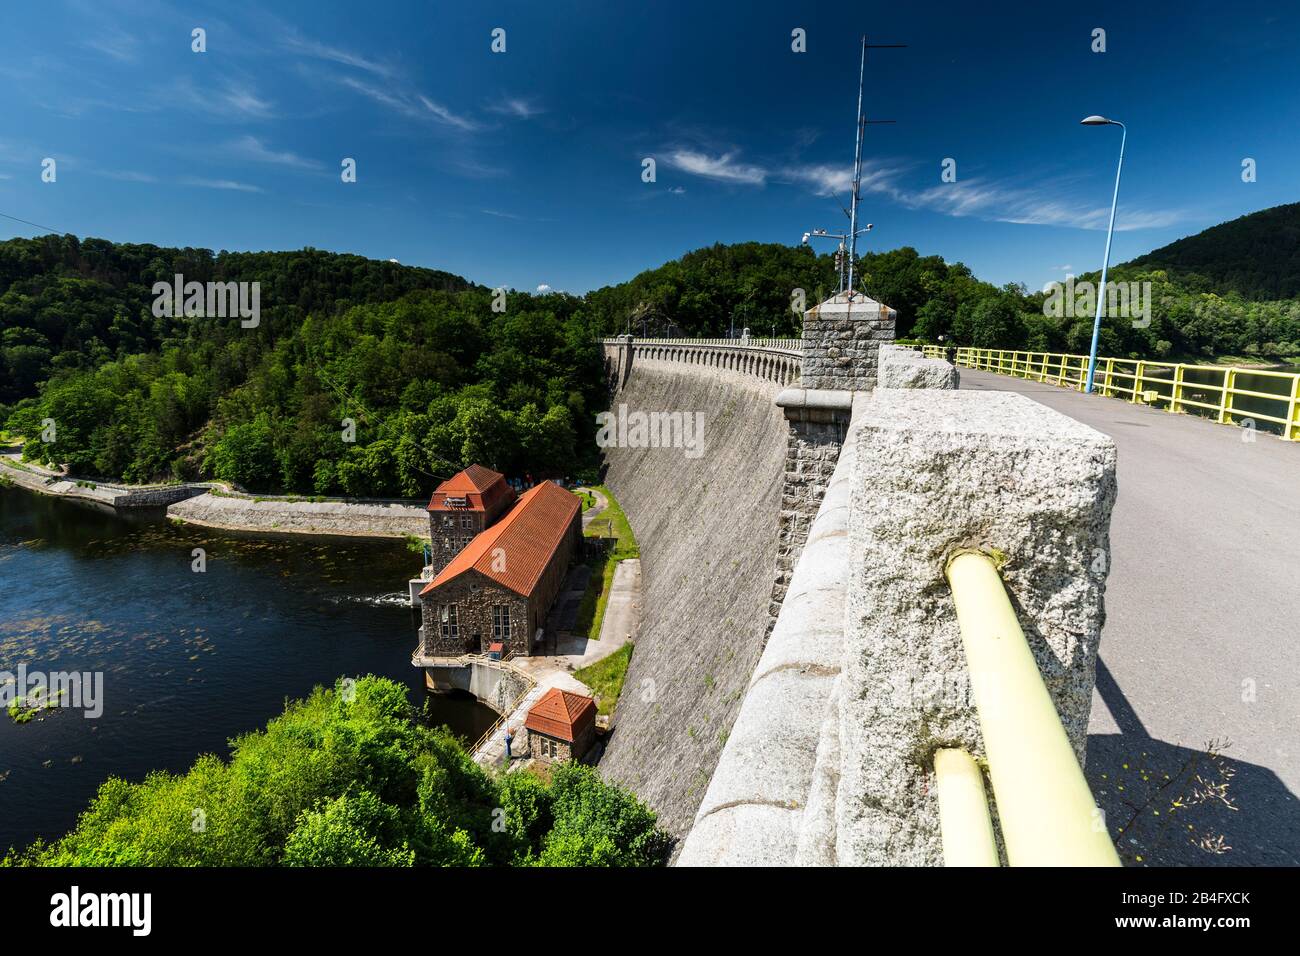 Europe, Poland, Lower Silesia, Pilchowice Dam / Bobertalsperre Mauer Stock Photo